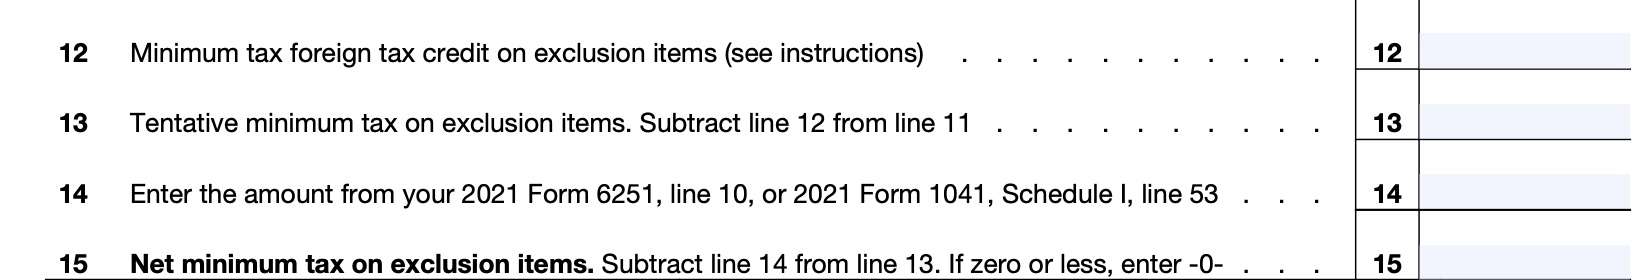 irs form 8801, lines 12 through 15